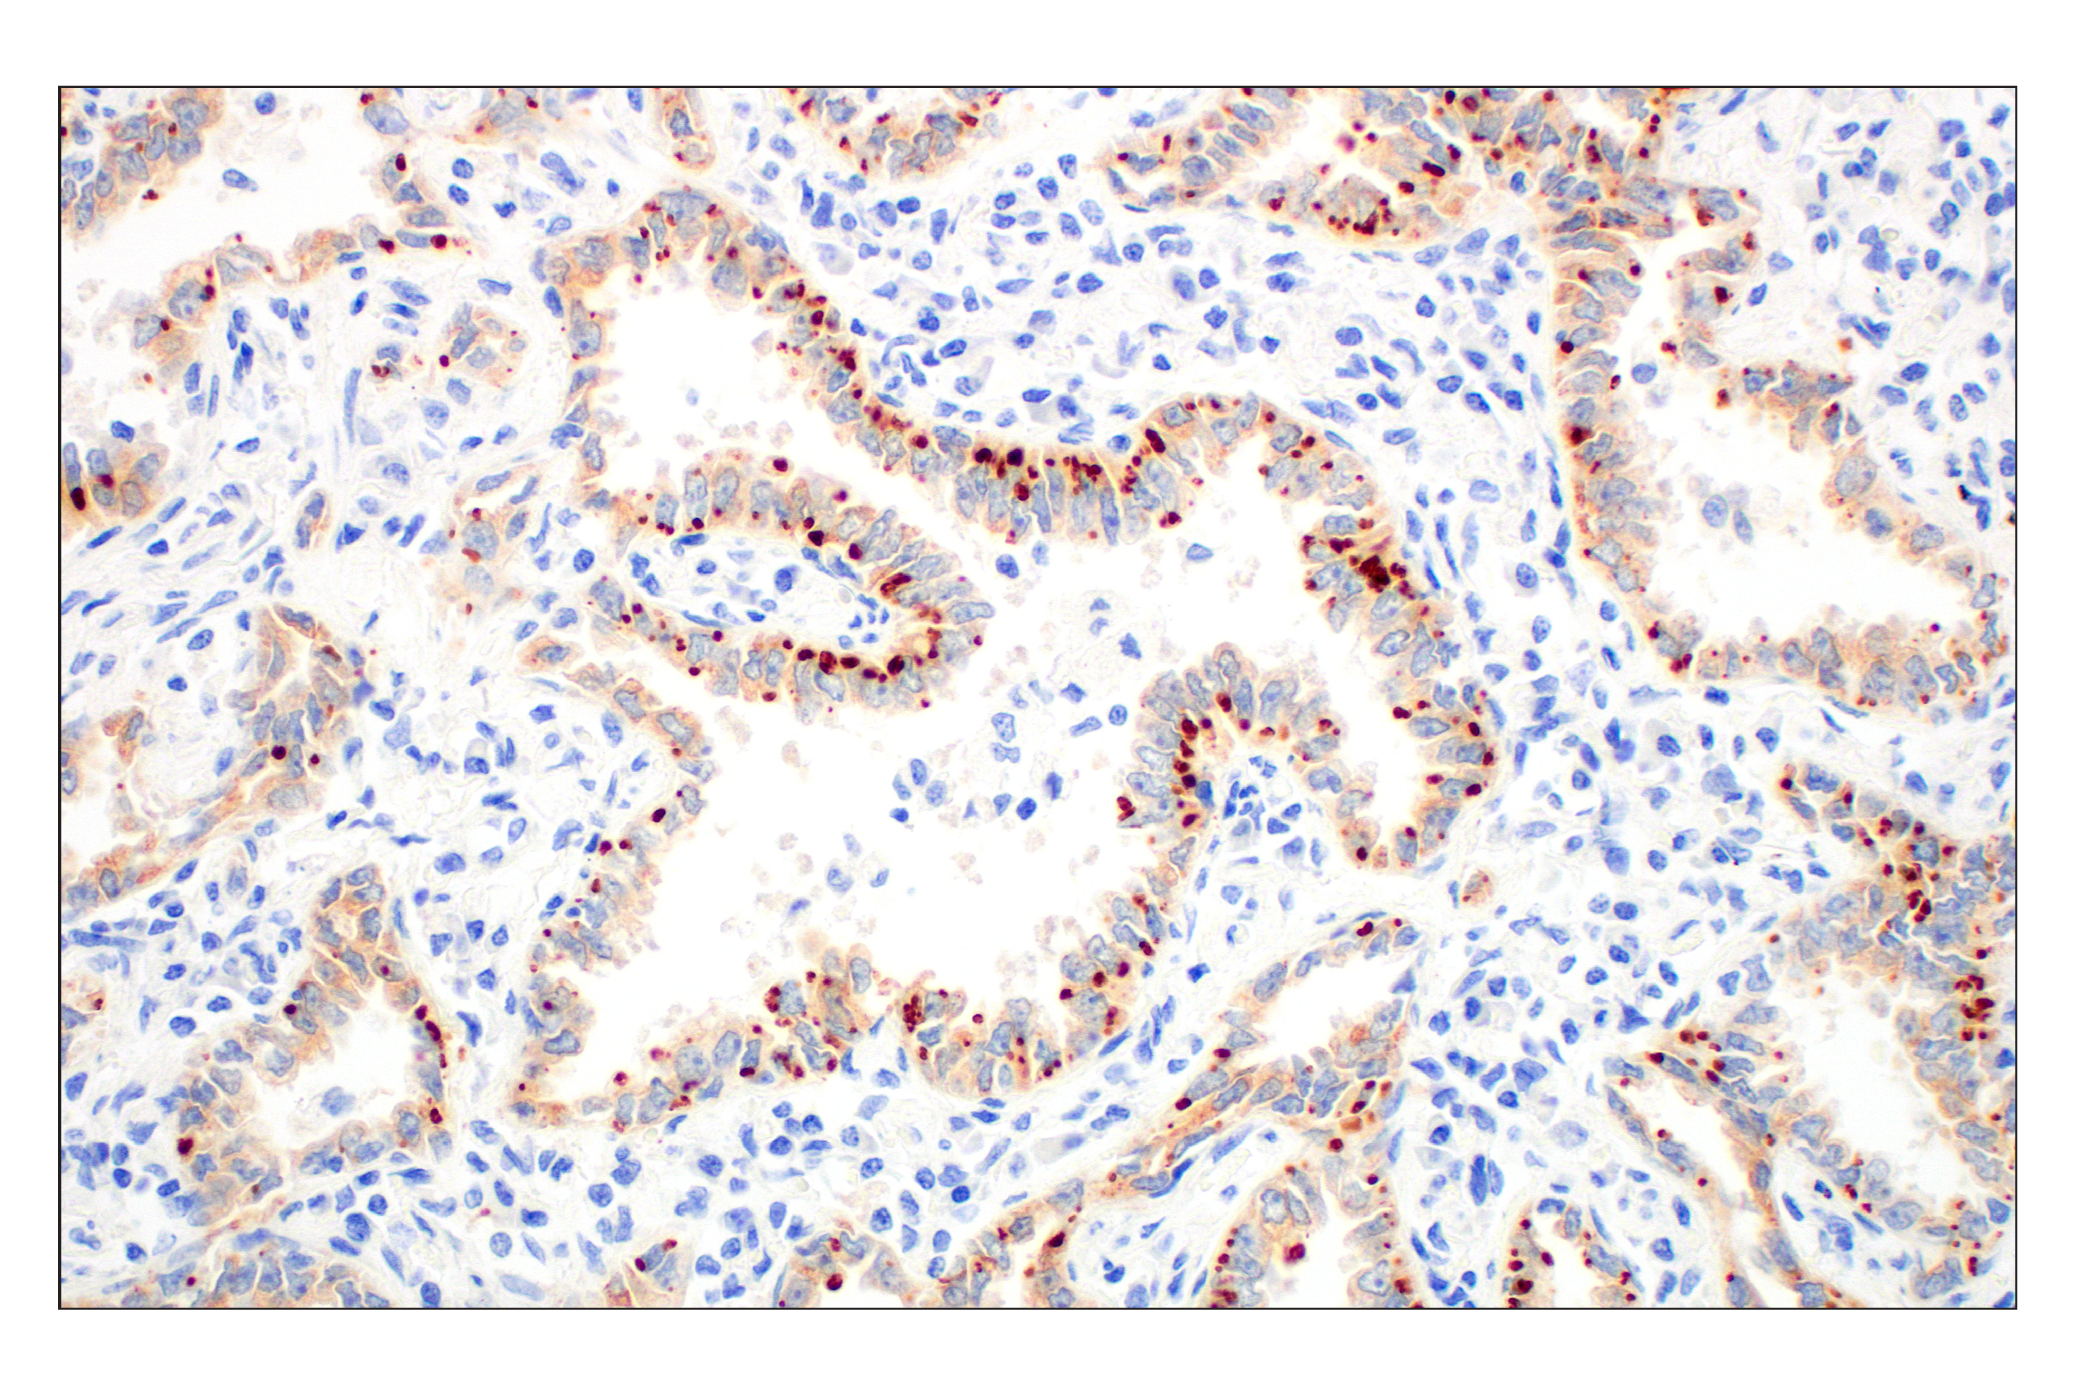  Image 49: Lung Cancer RTK Antibody Sampler Kit